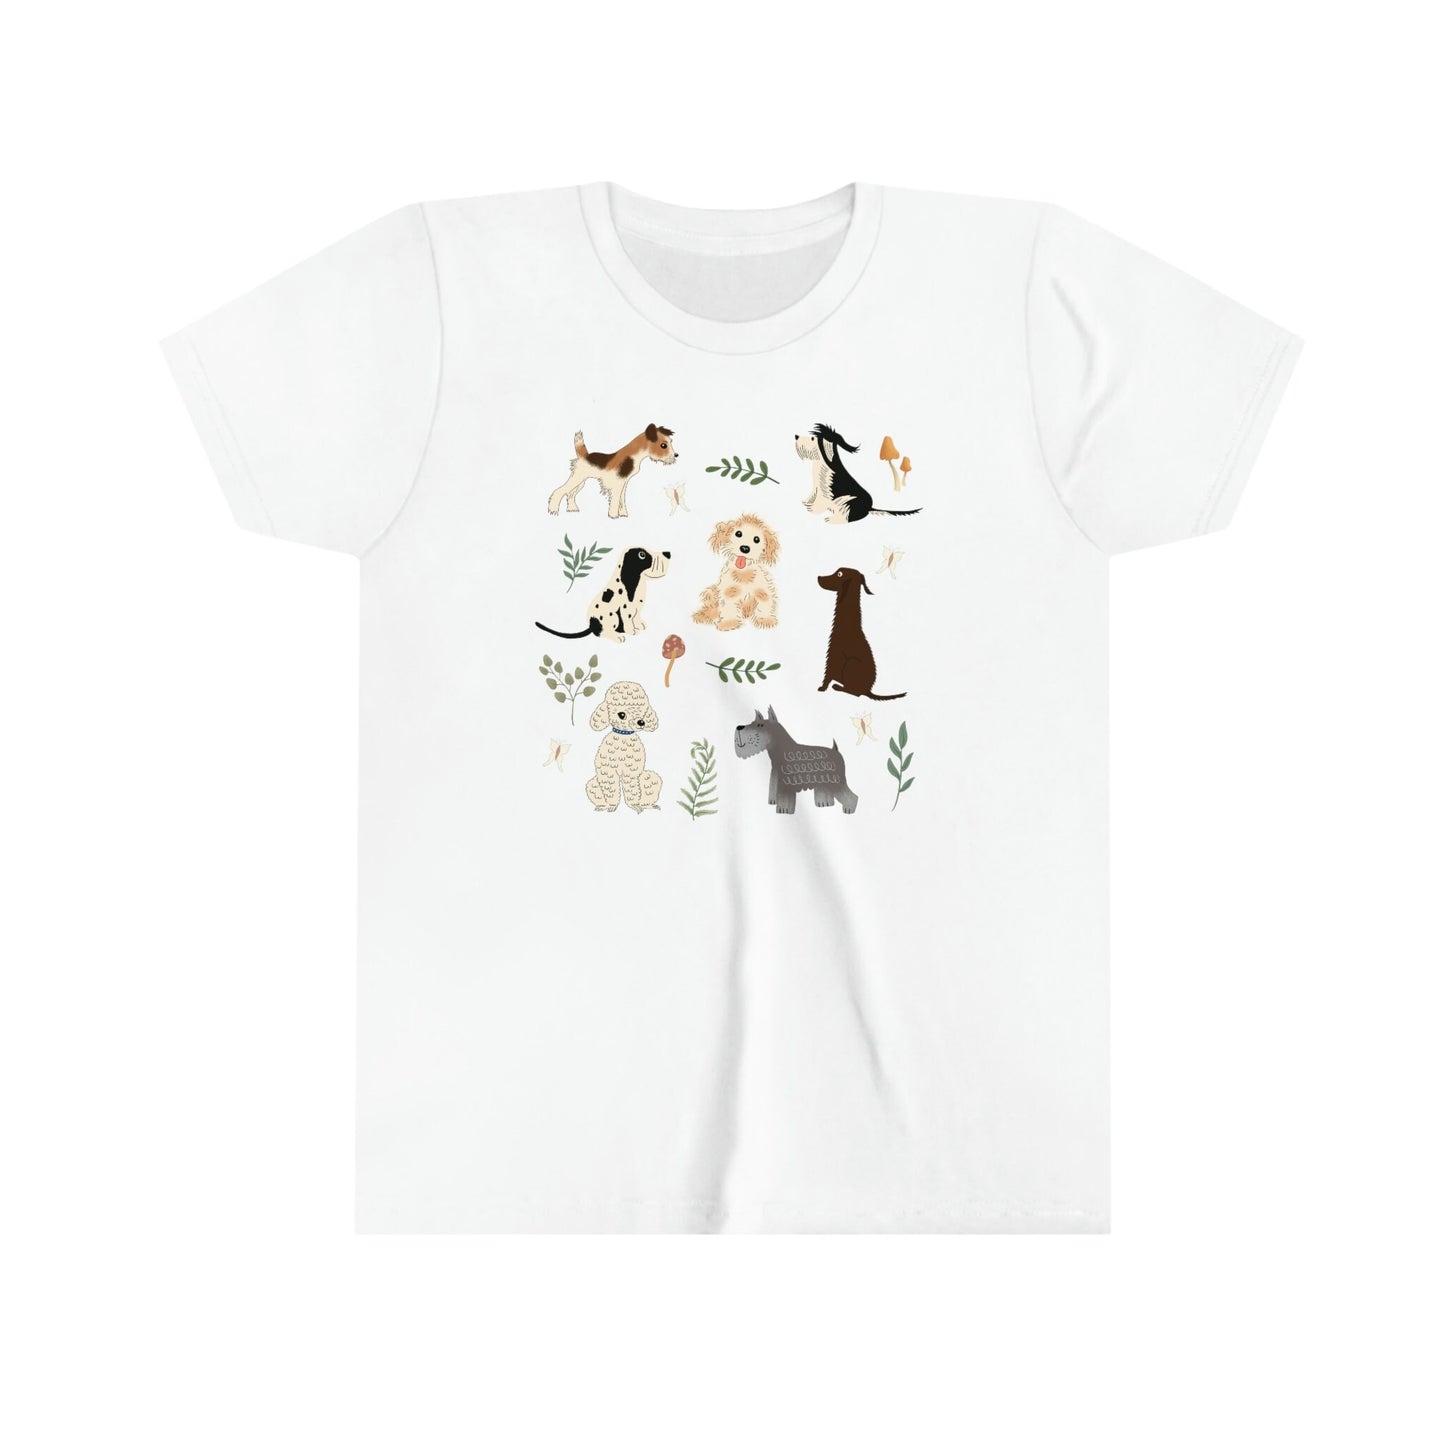 Kids Dog Shirt Toddler Dog Shirt Kids Cottage Core Clothes Dog Lover Gift Puppy Shirt for Girls Youth Shirt Dog Lover Animal Lover Gift Girl